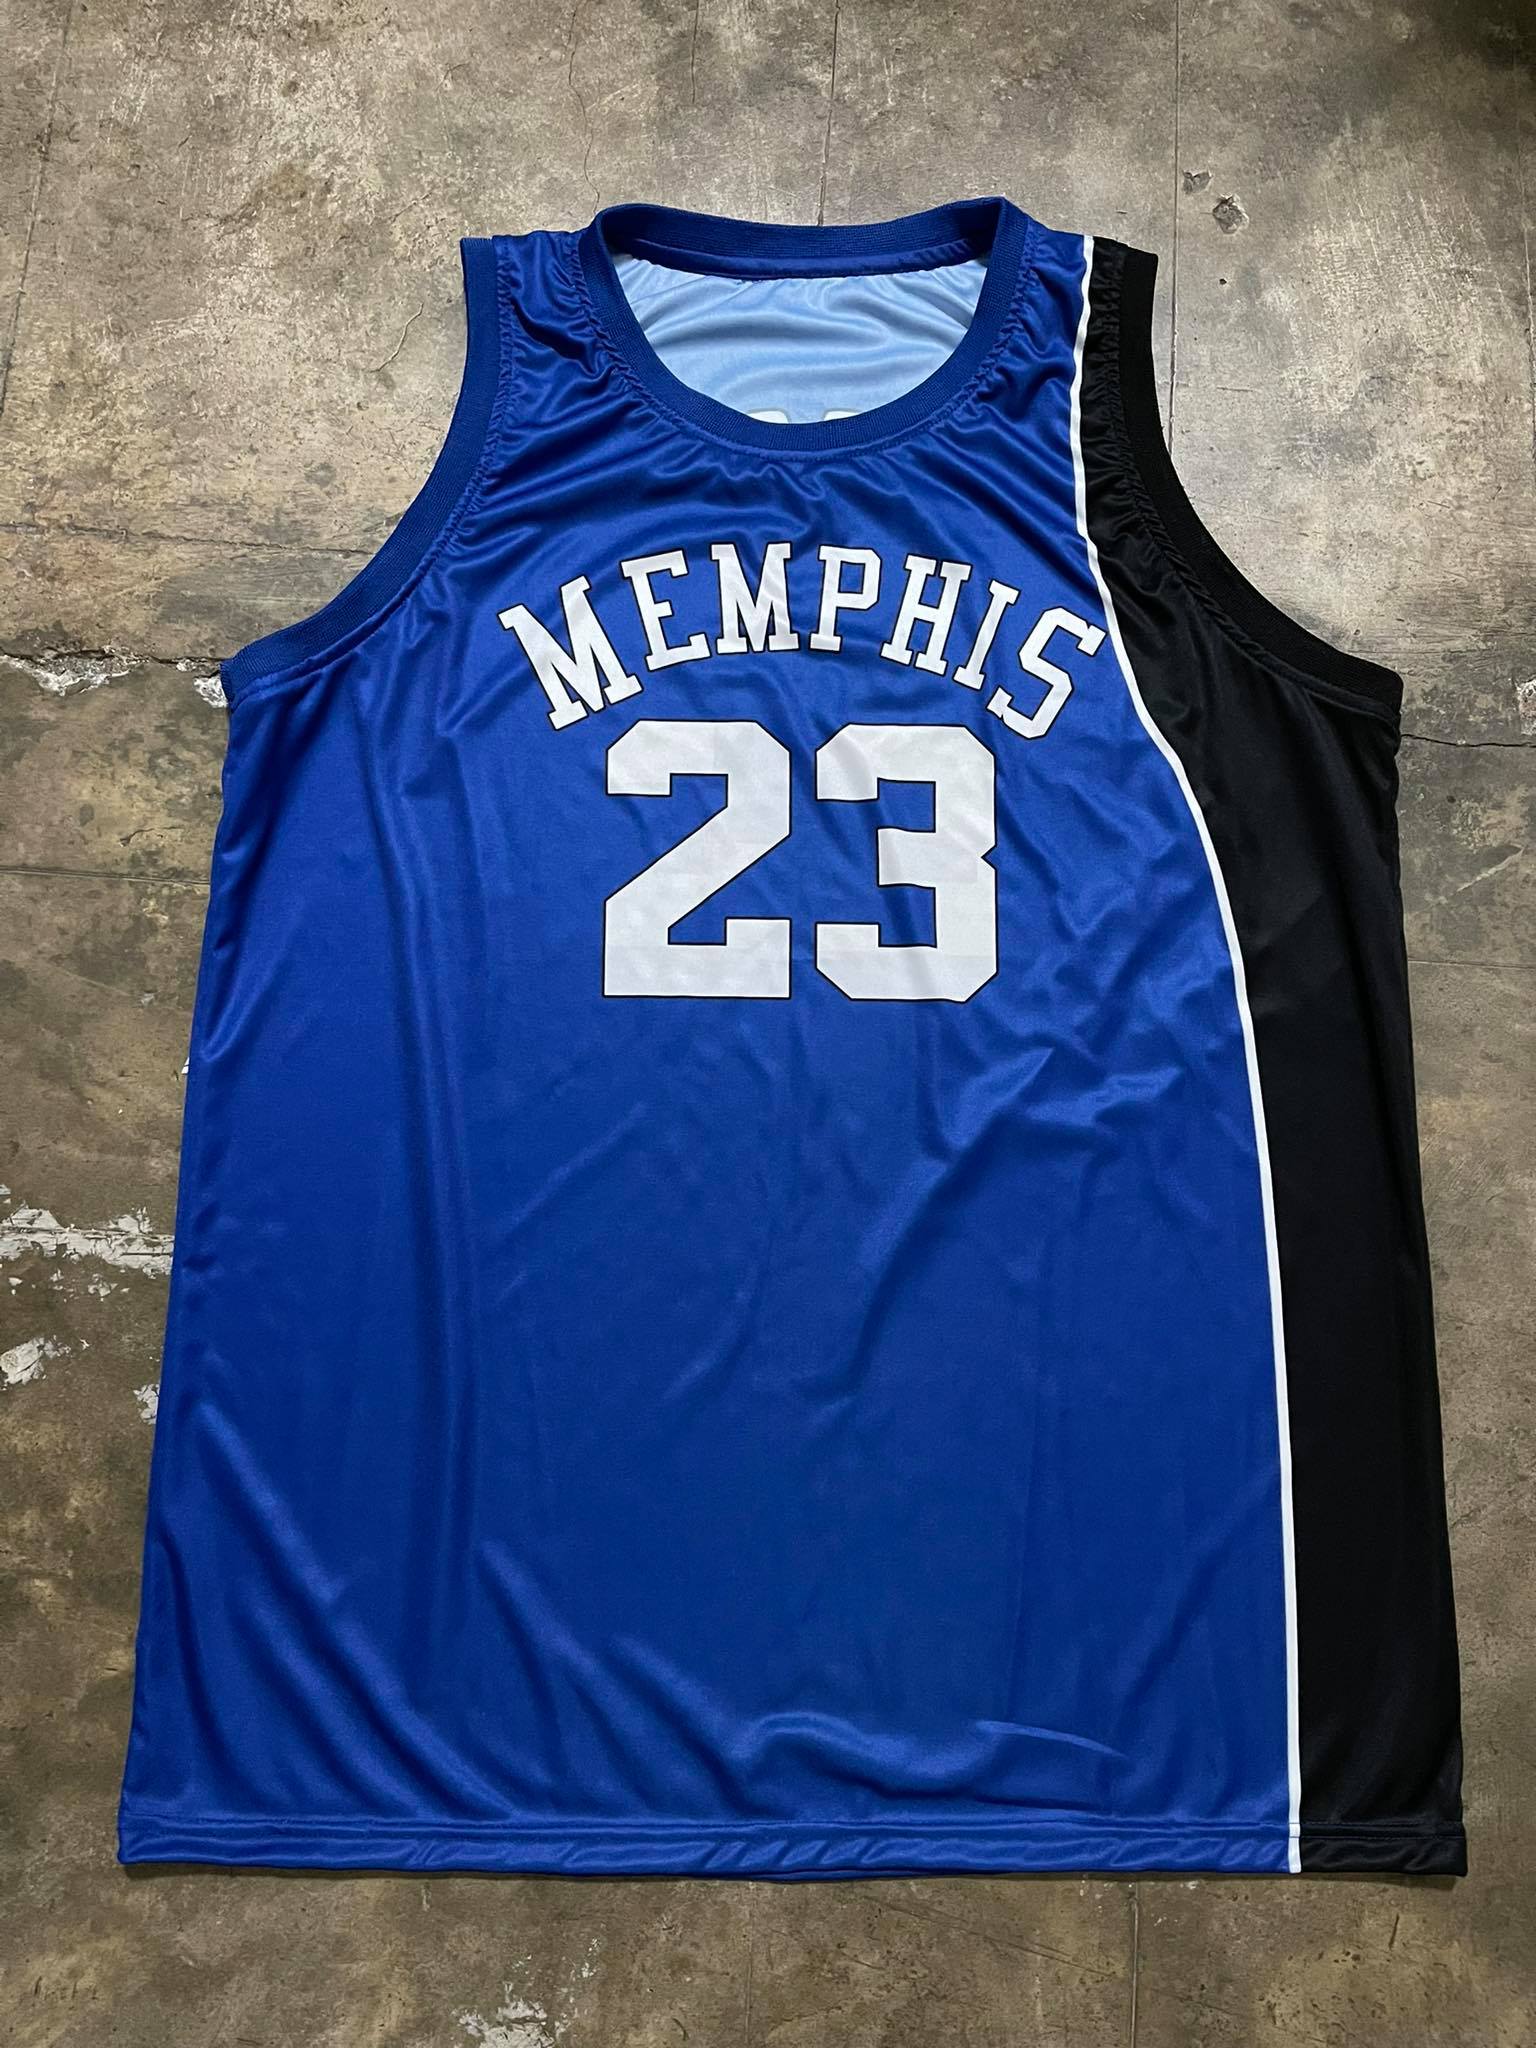 Derrick Rose #23 Jersey of Memphis Tigers Basketball Team - Sizes : S-4XL